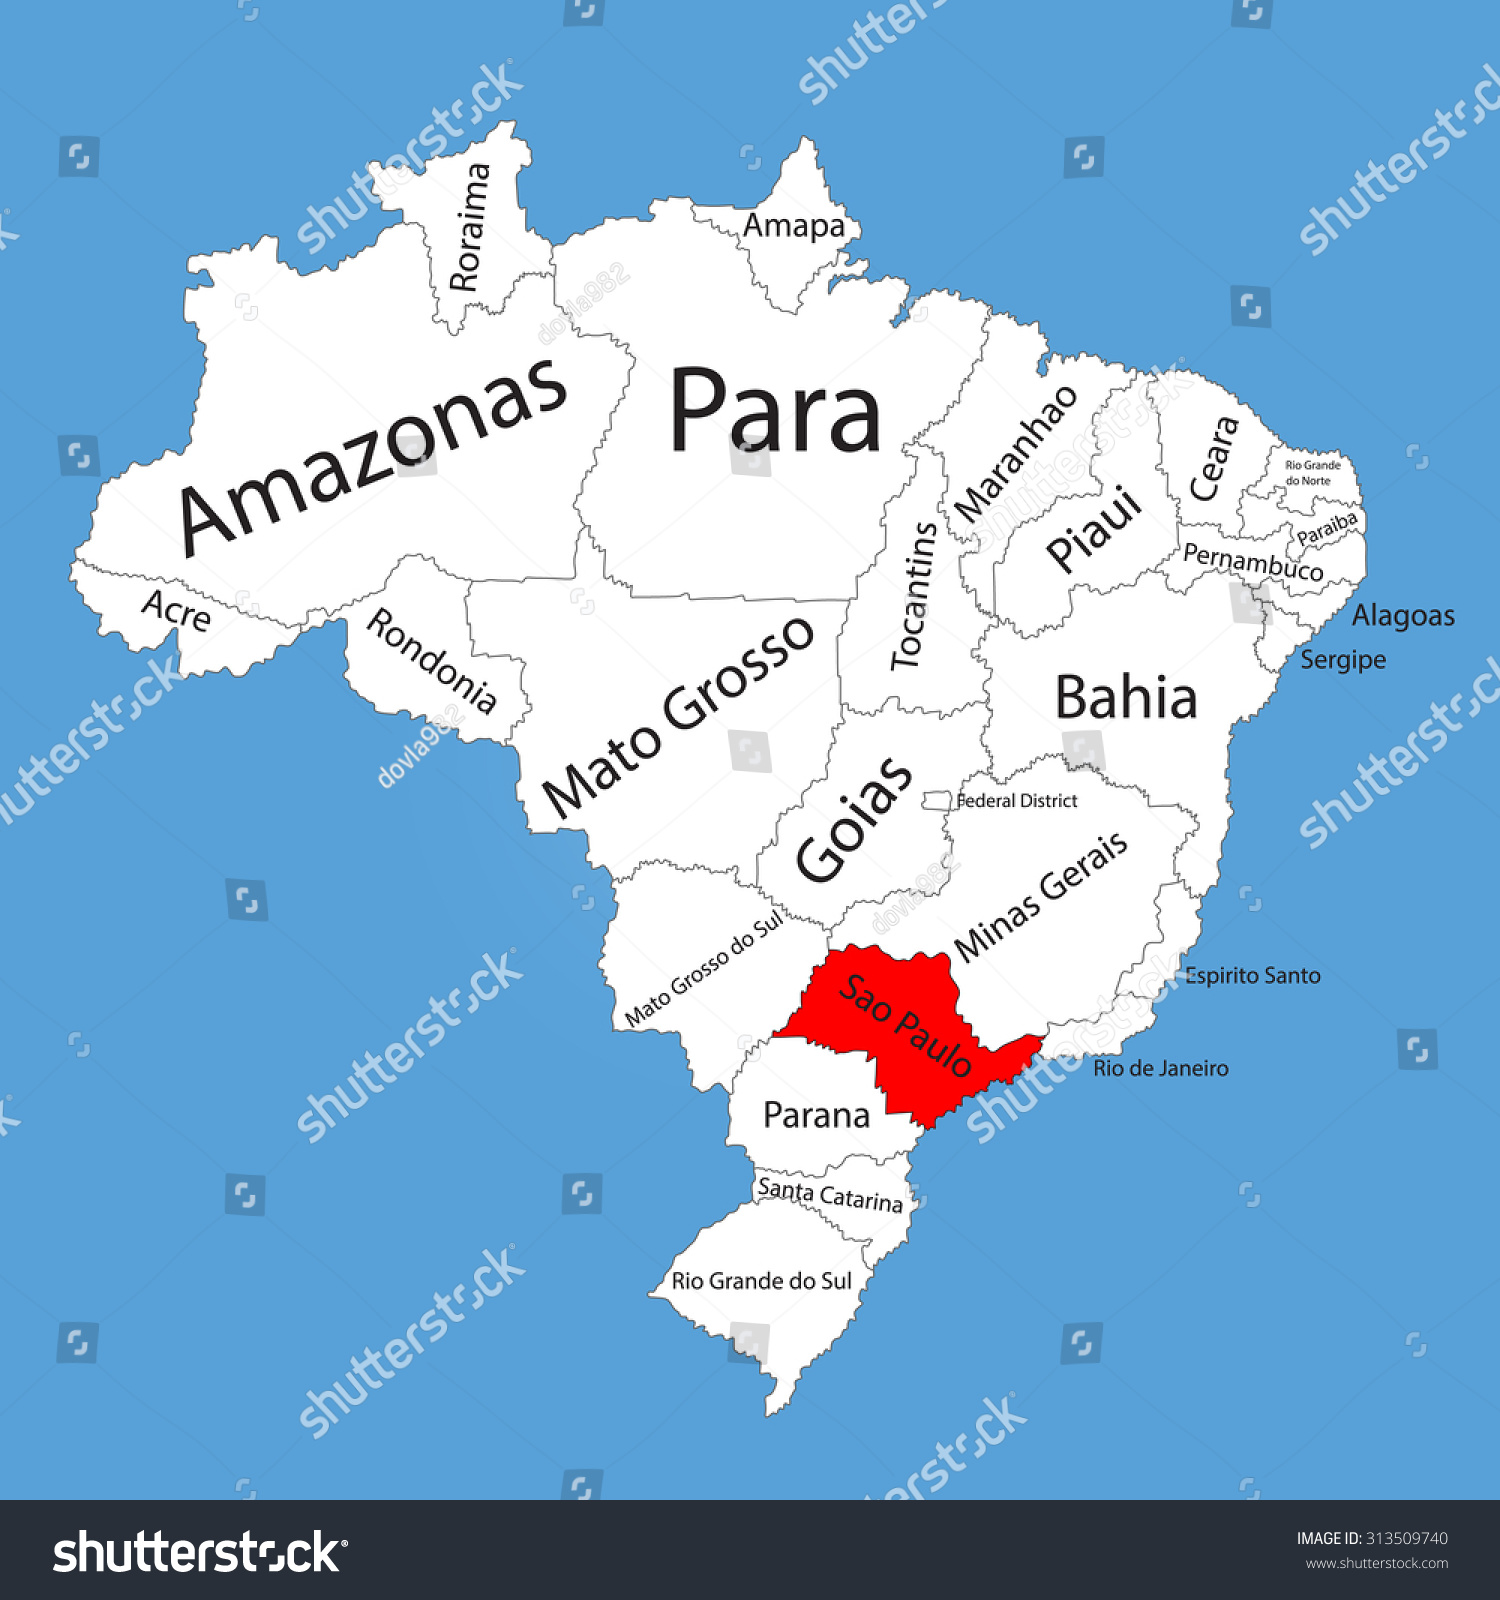 sao paulo on a map Sao Paulo Brazil Vector Map Isolated Stock Vector Royalty Free sao paulo on a map